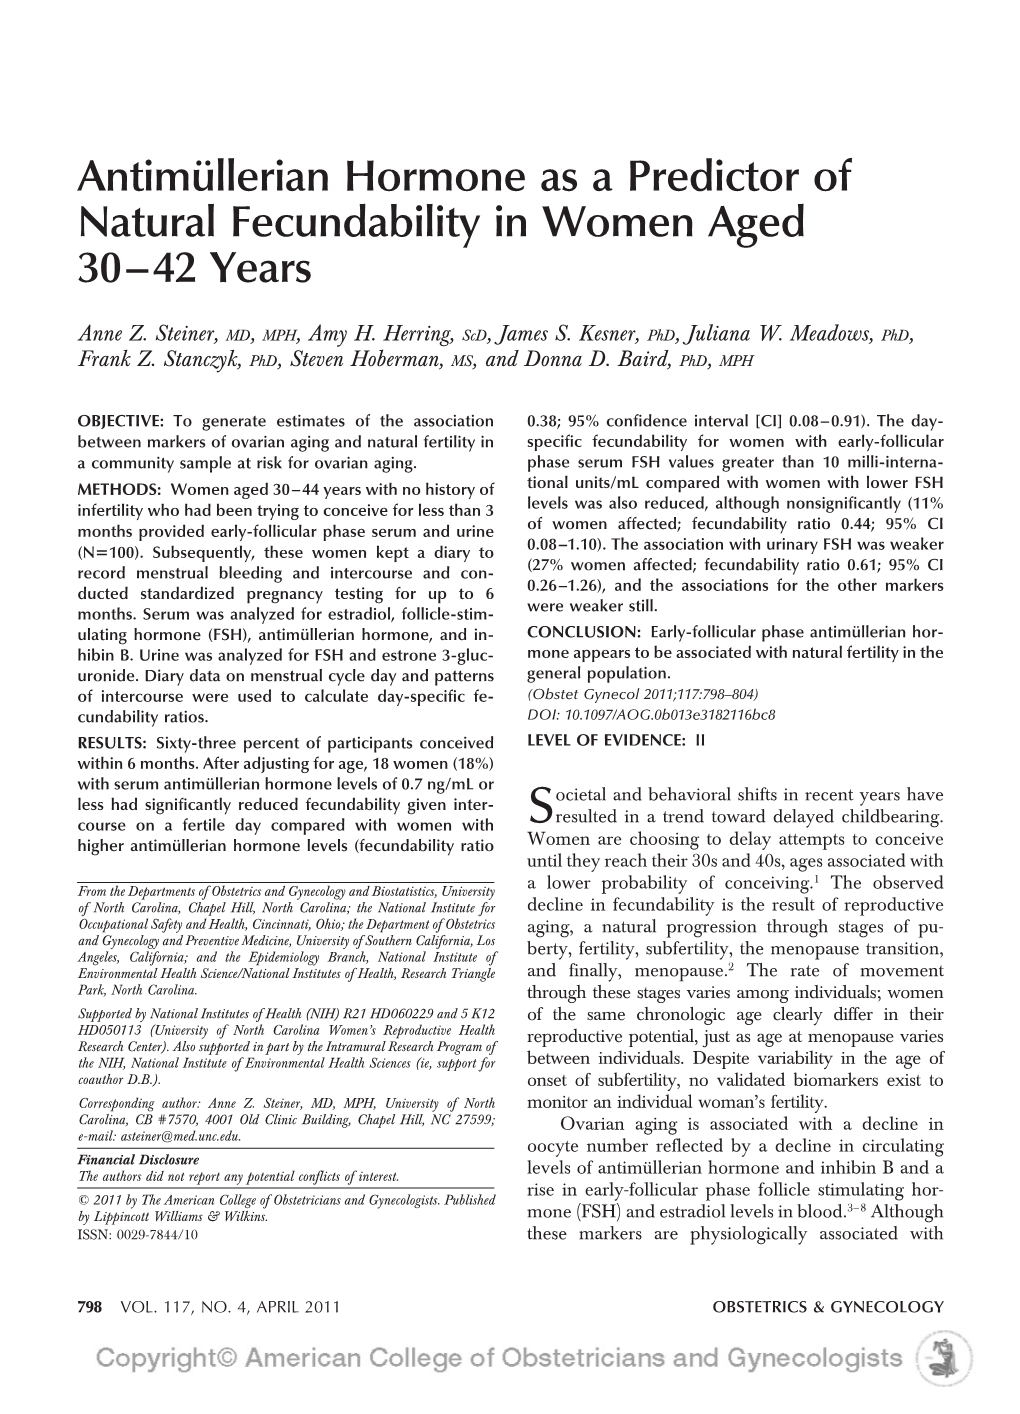 Antimu¨Llerian Hormone As a Predictor of Natural Fecundability in Women